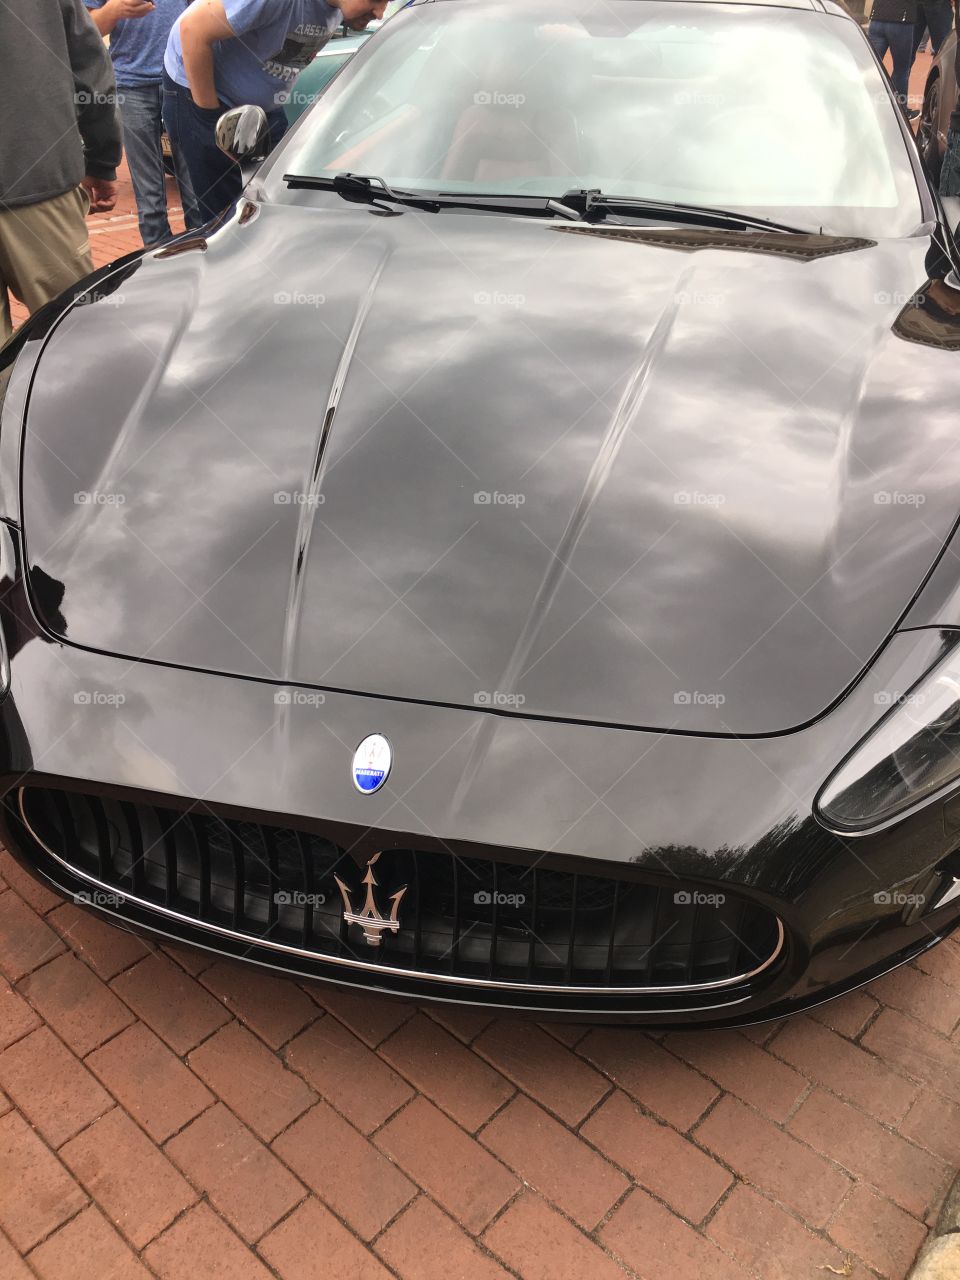 Maserati reflecting on before race